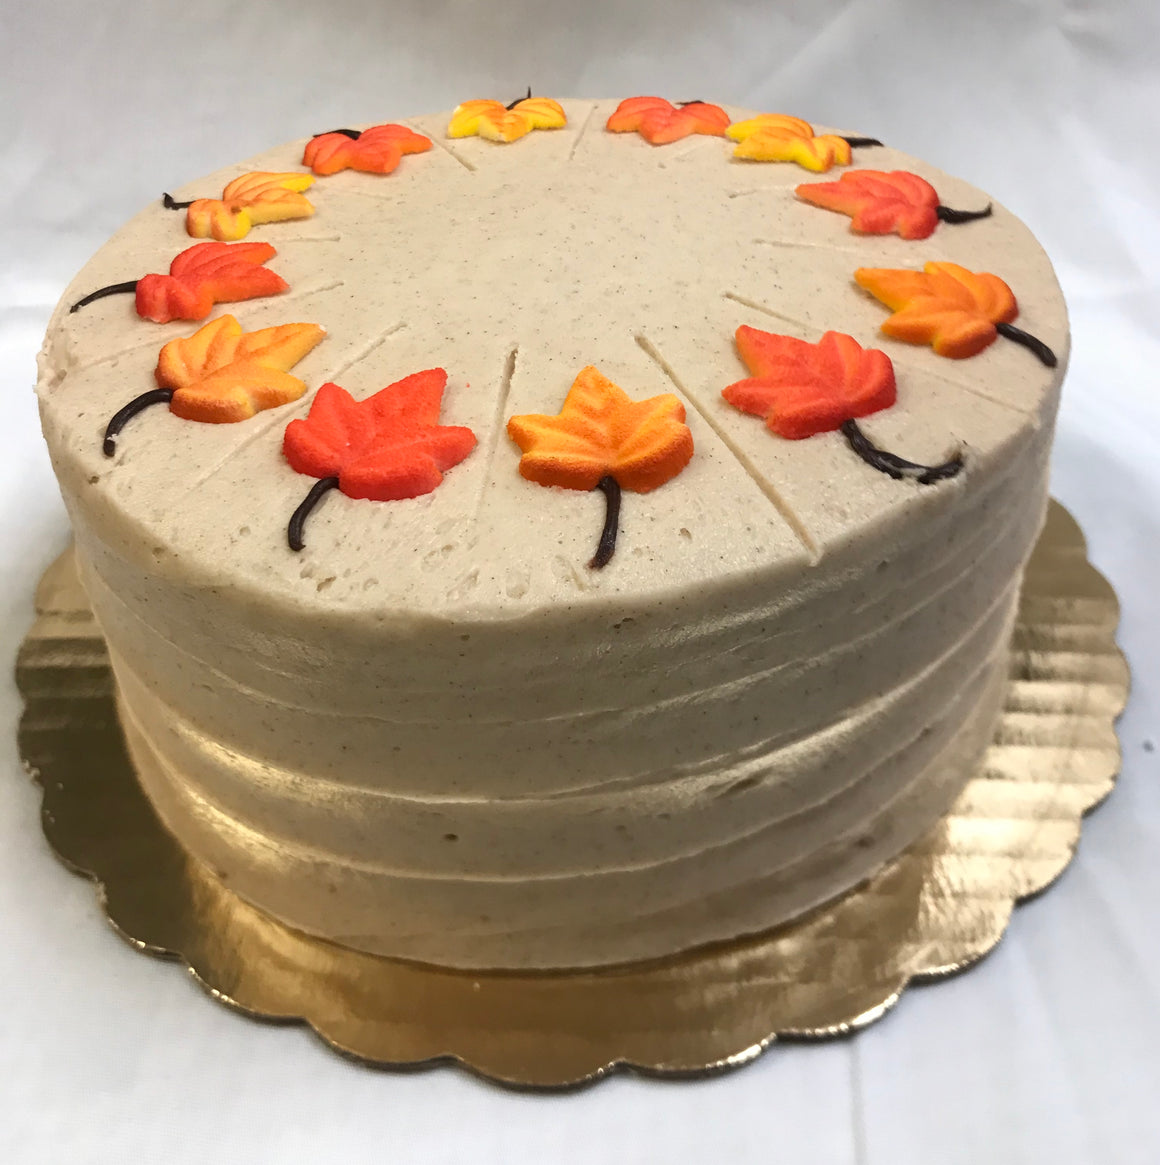 Harvest Spice 7" Torte Cake